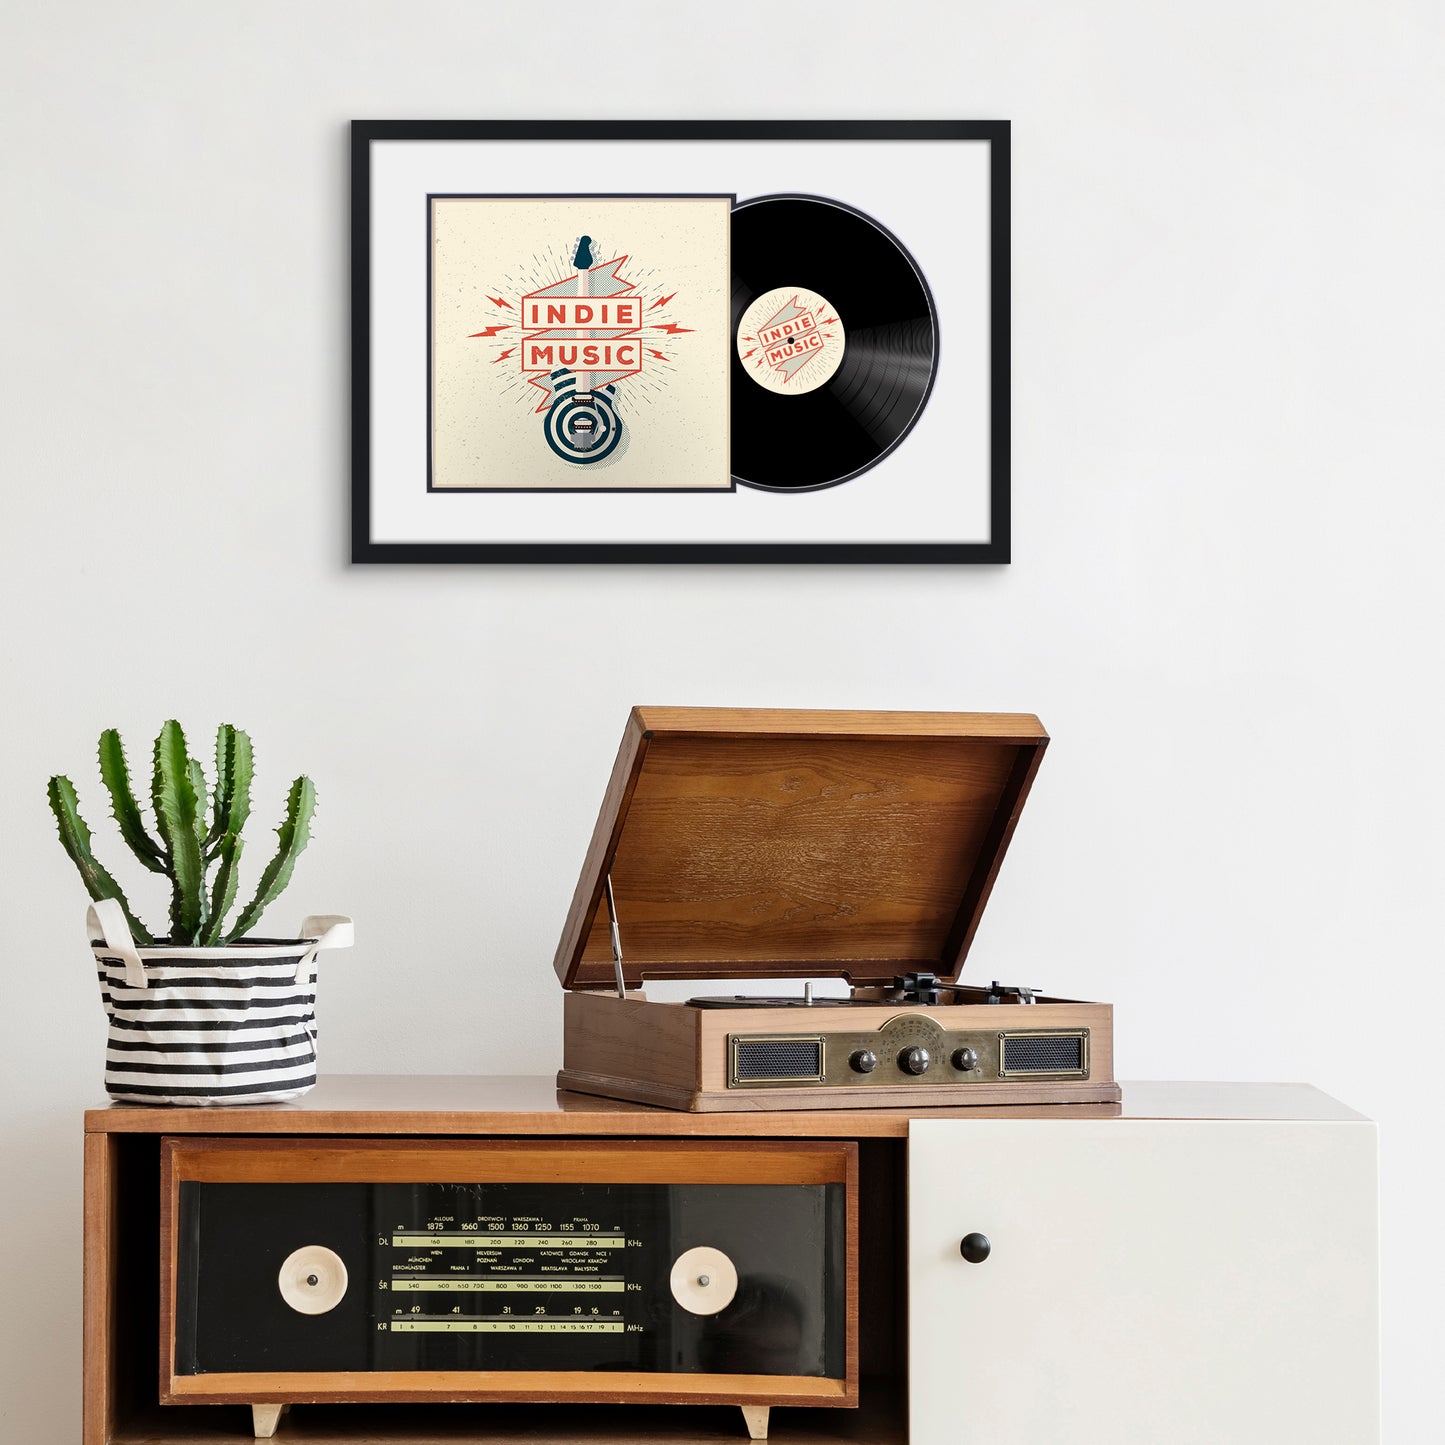 Americanflat Wide Vinyl Record & Album Art Frame - 25x16.5 - Black